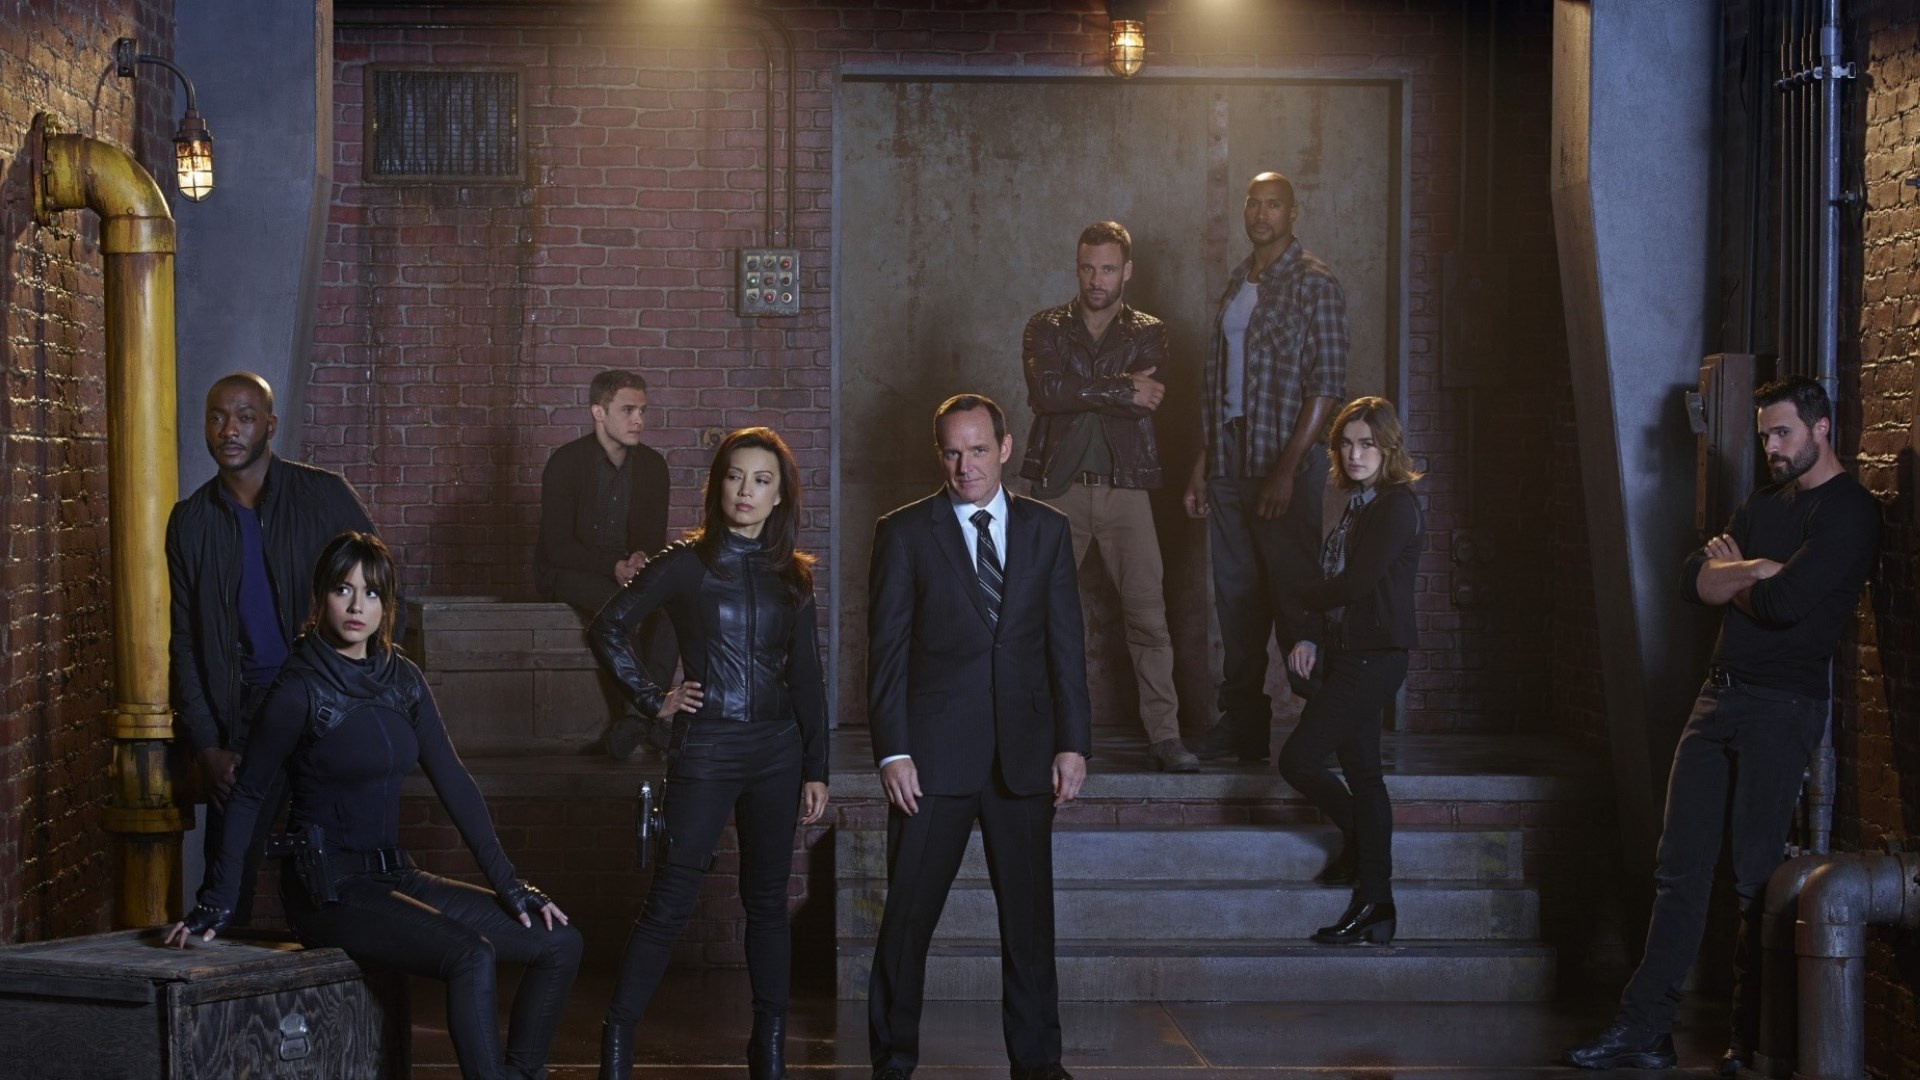 S.H.I.E.L.D.: An elite team of agents who investigate strange occurrences, MCU. 1920x1080 Full HD Wallpaper.